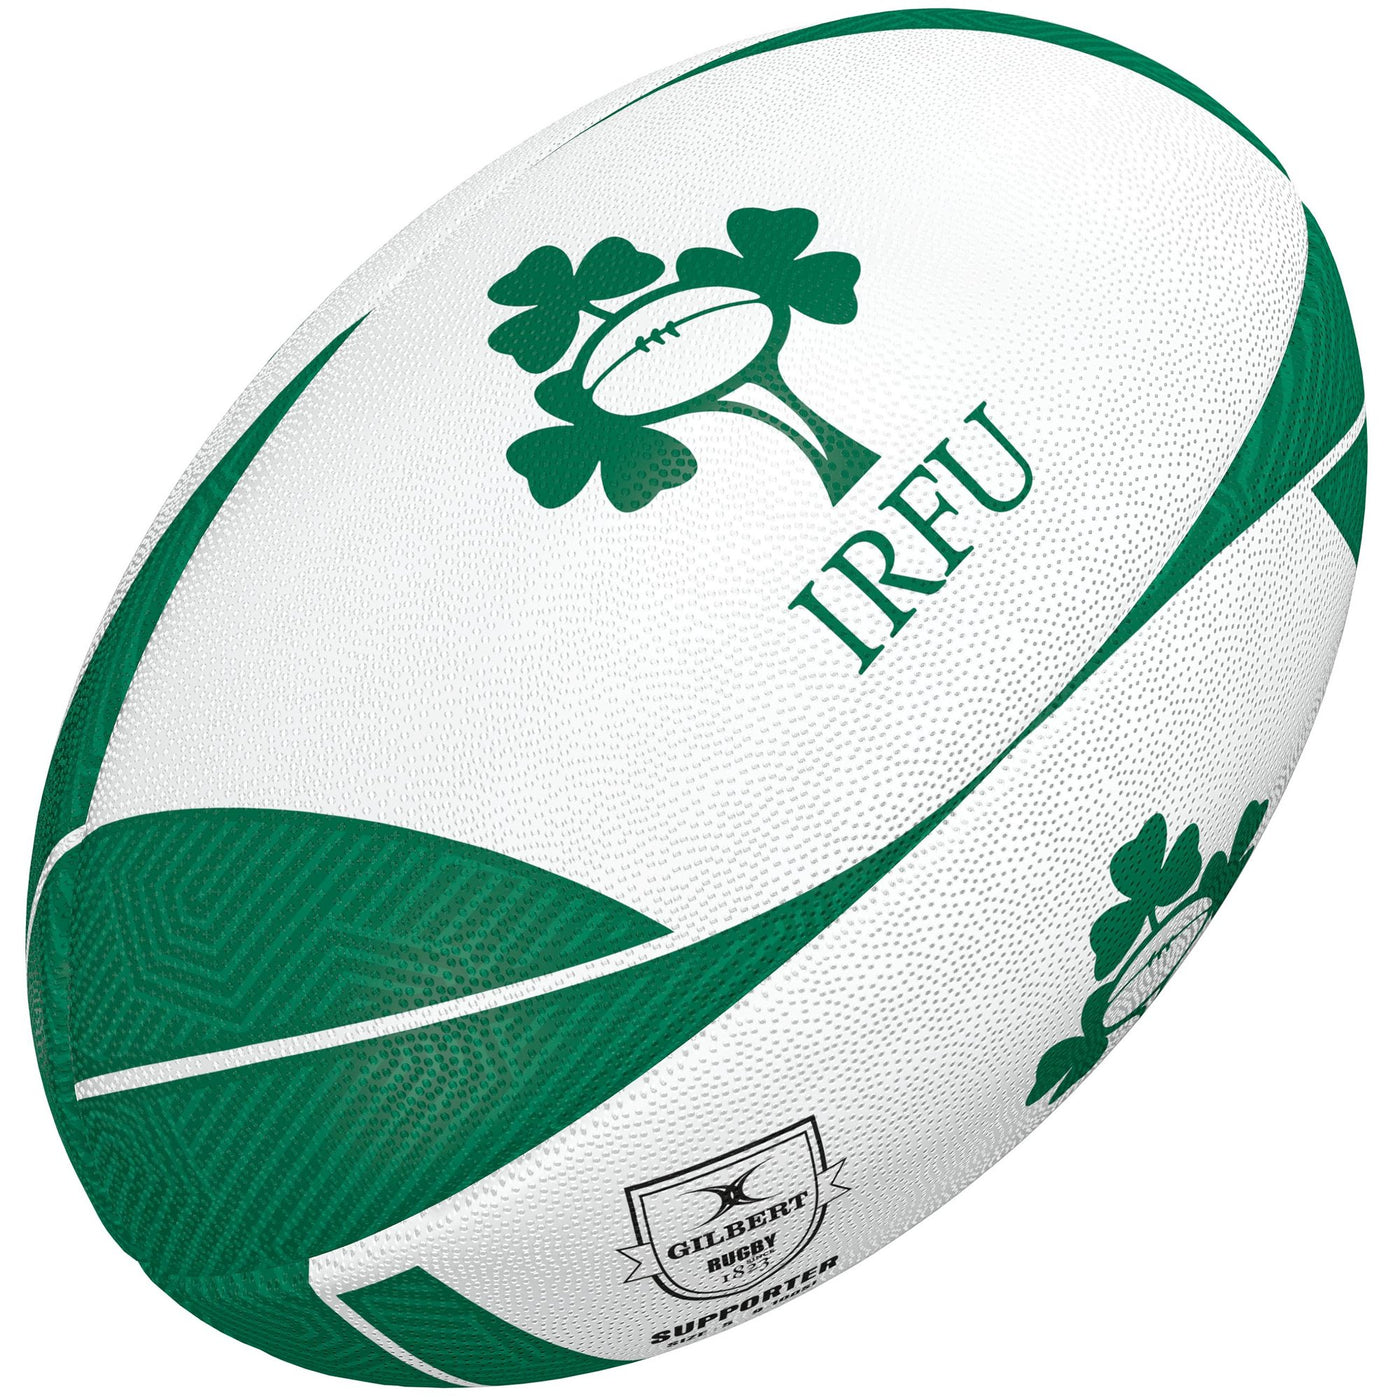 Ierland Rugbybal Supporter Maat 5